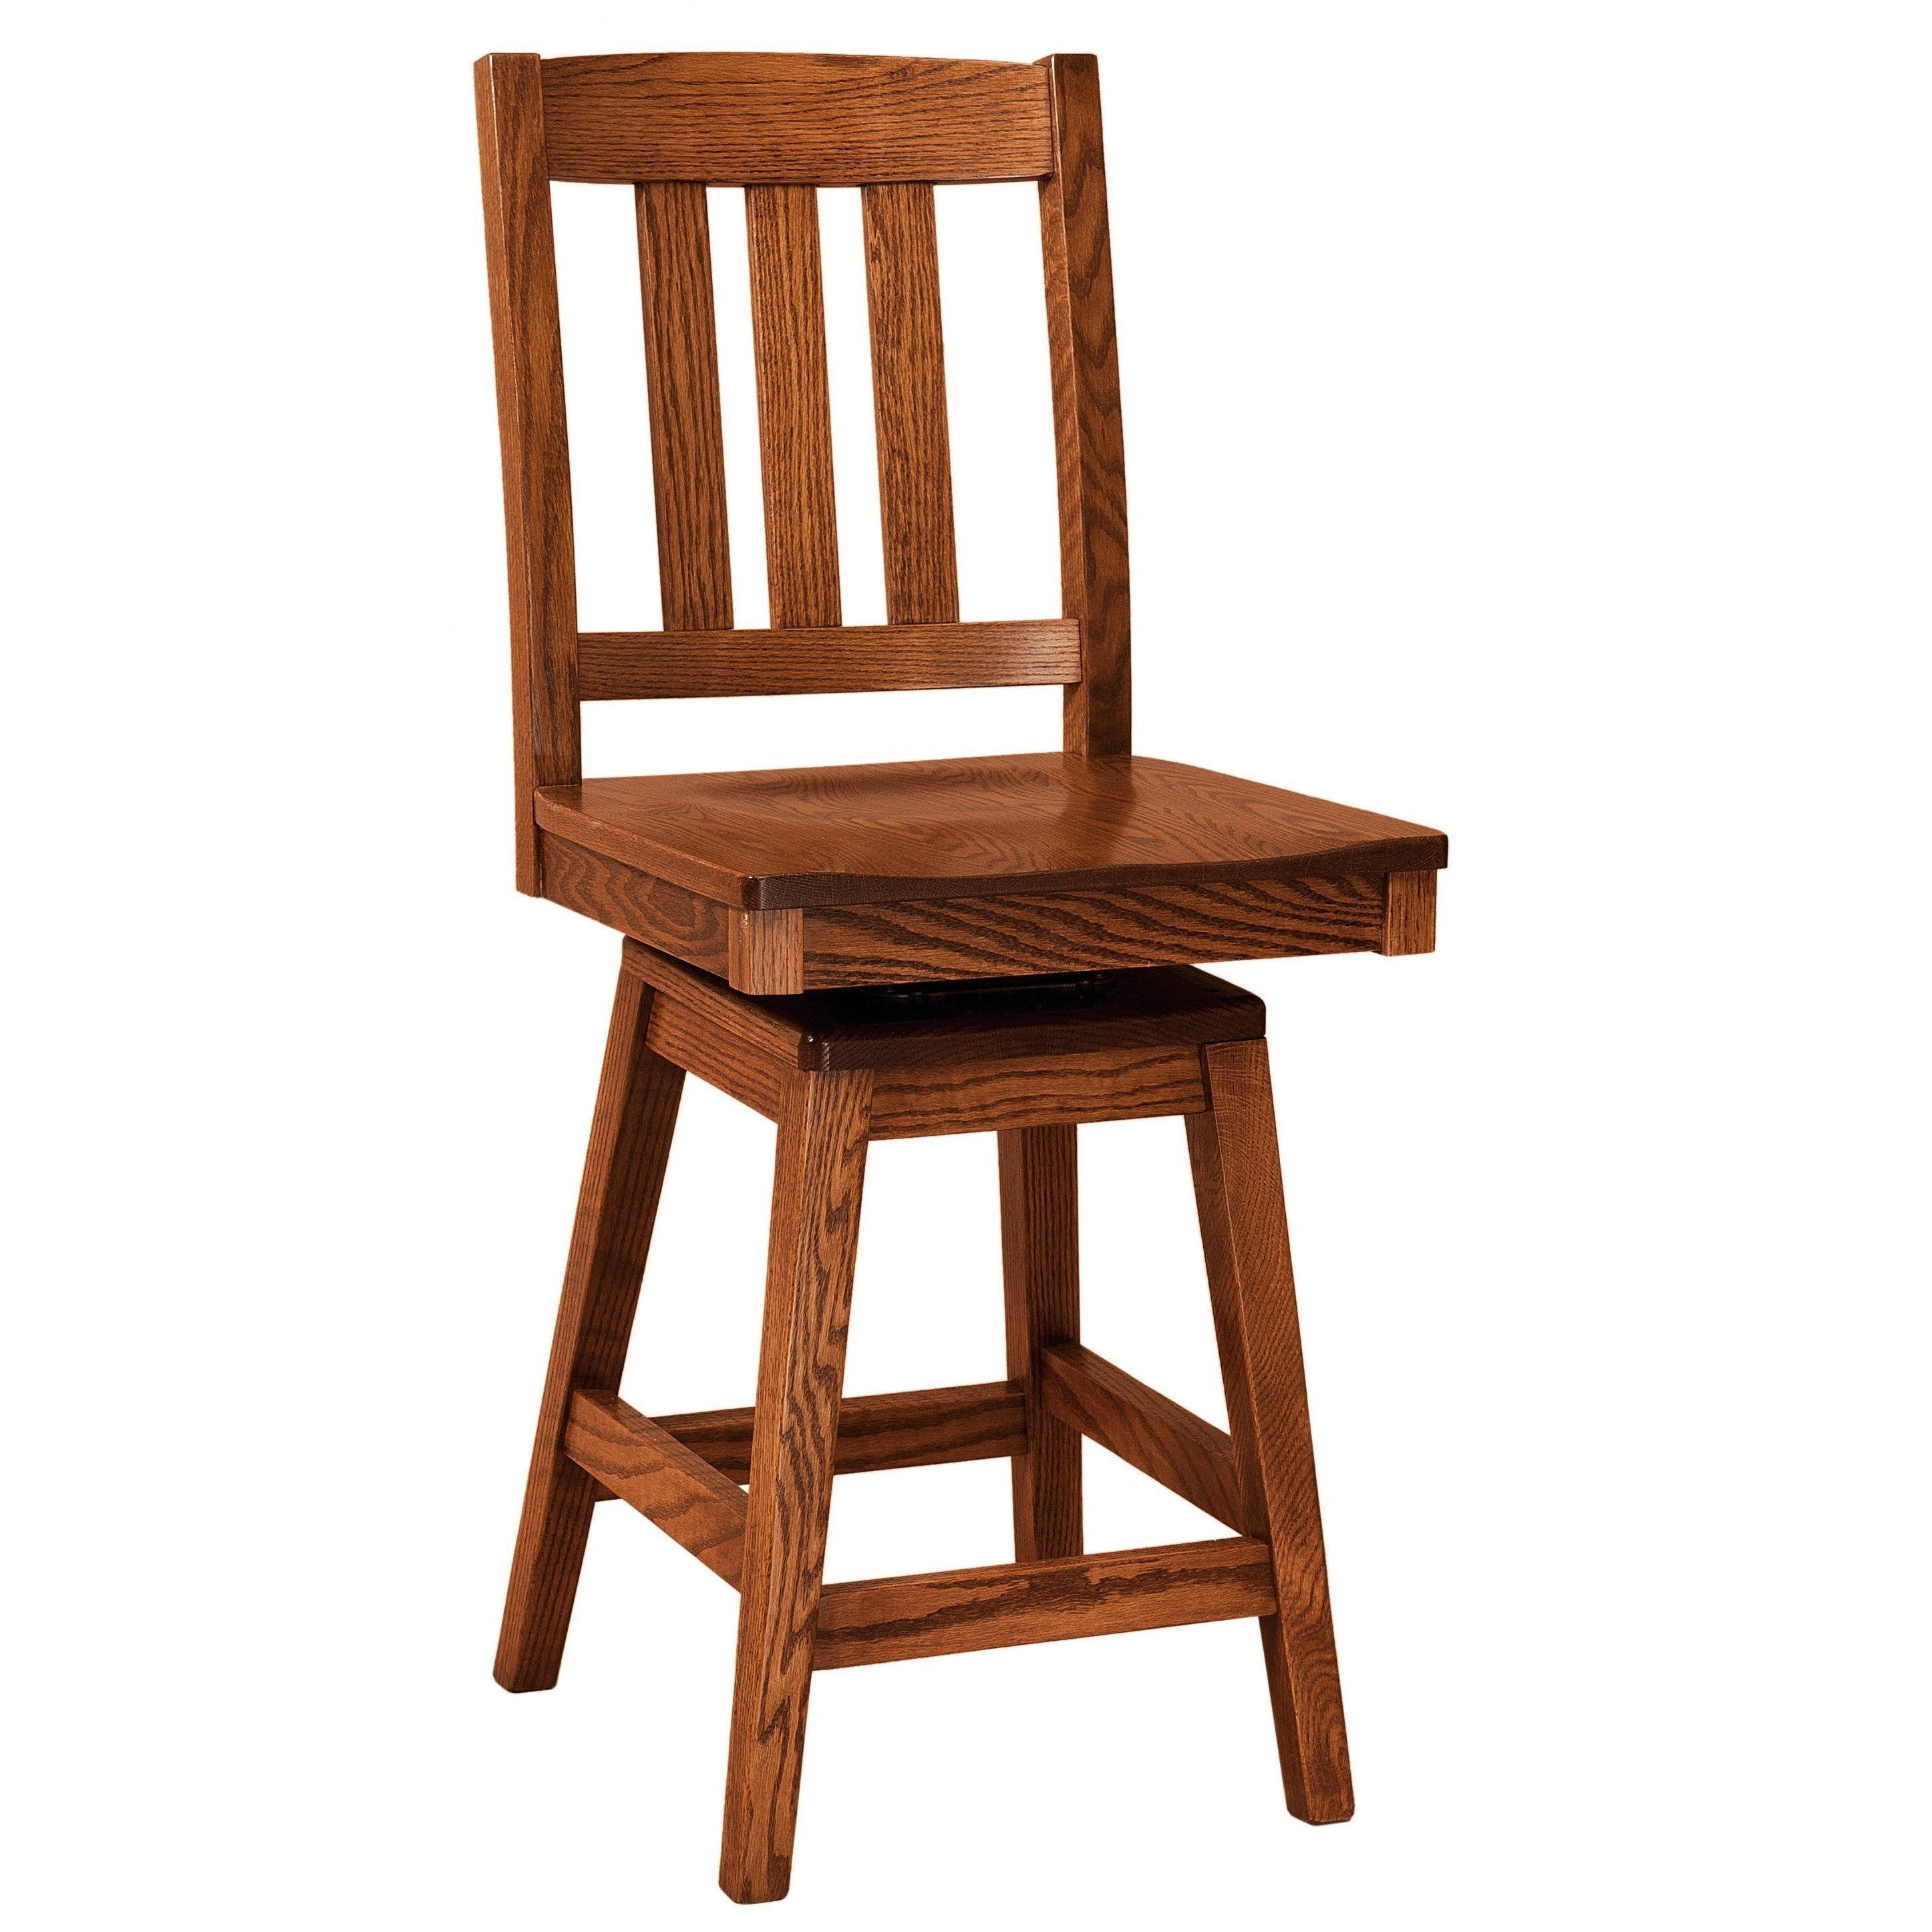 lodge-swivel-bar-chair-260211.jpg